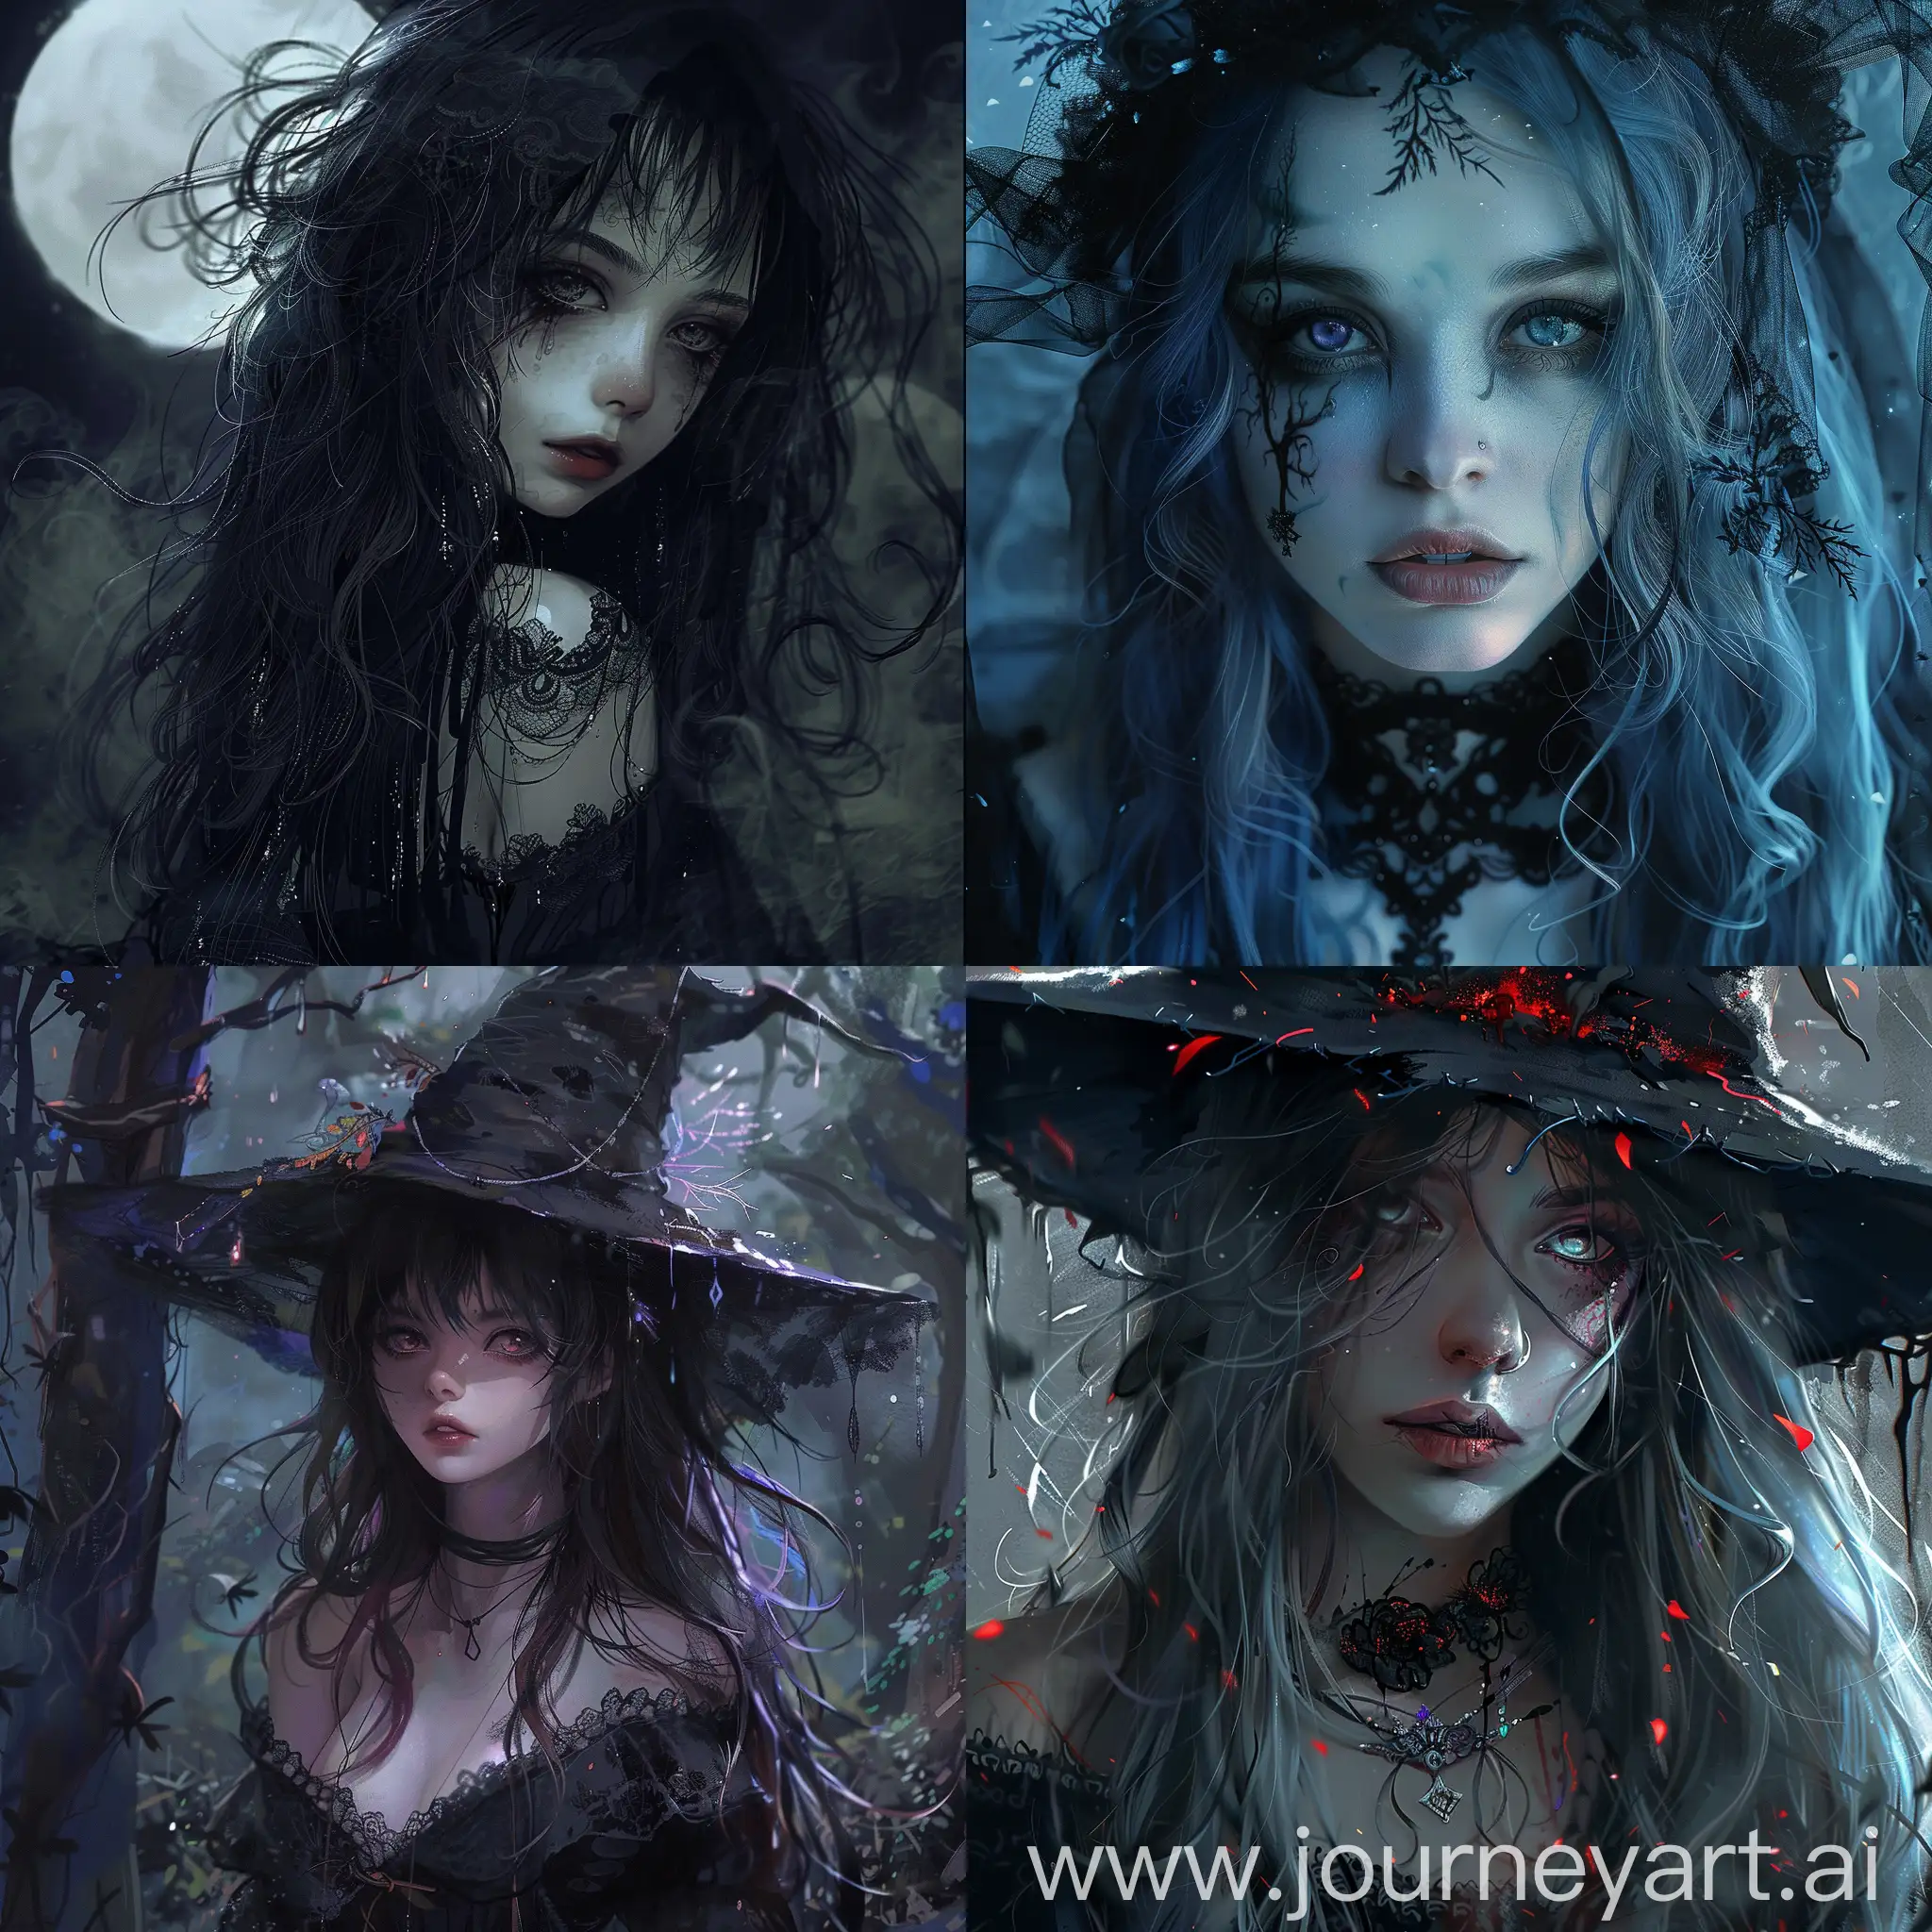 Dark fantasy, gothic horror, anime style, witch